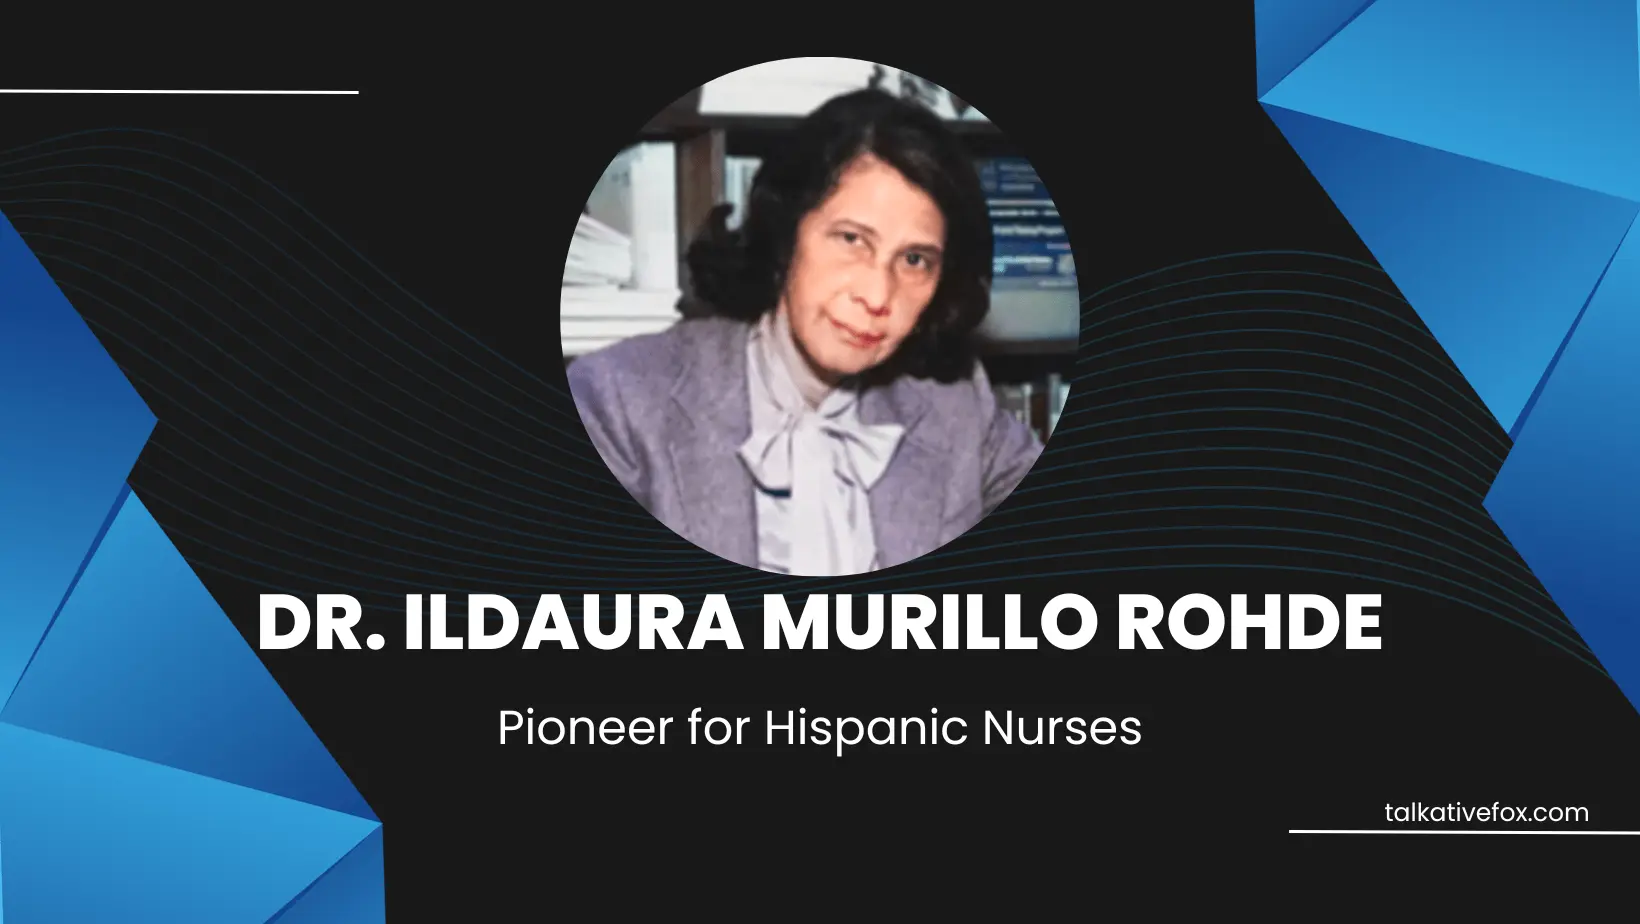 Dr. Ildaura Murillo Rohde - A Pioneer for Hispanic Nurses